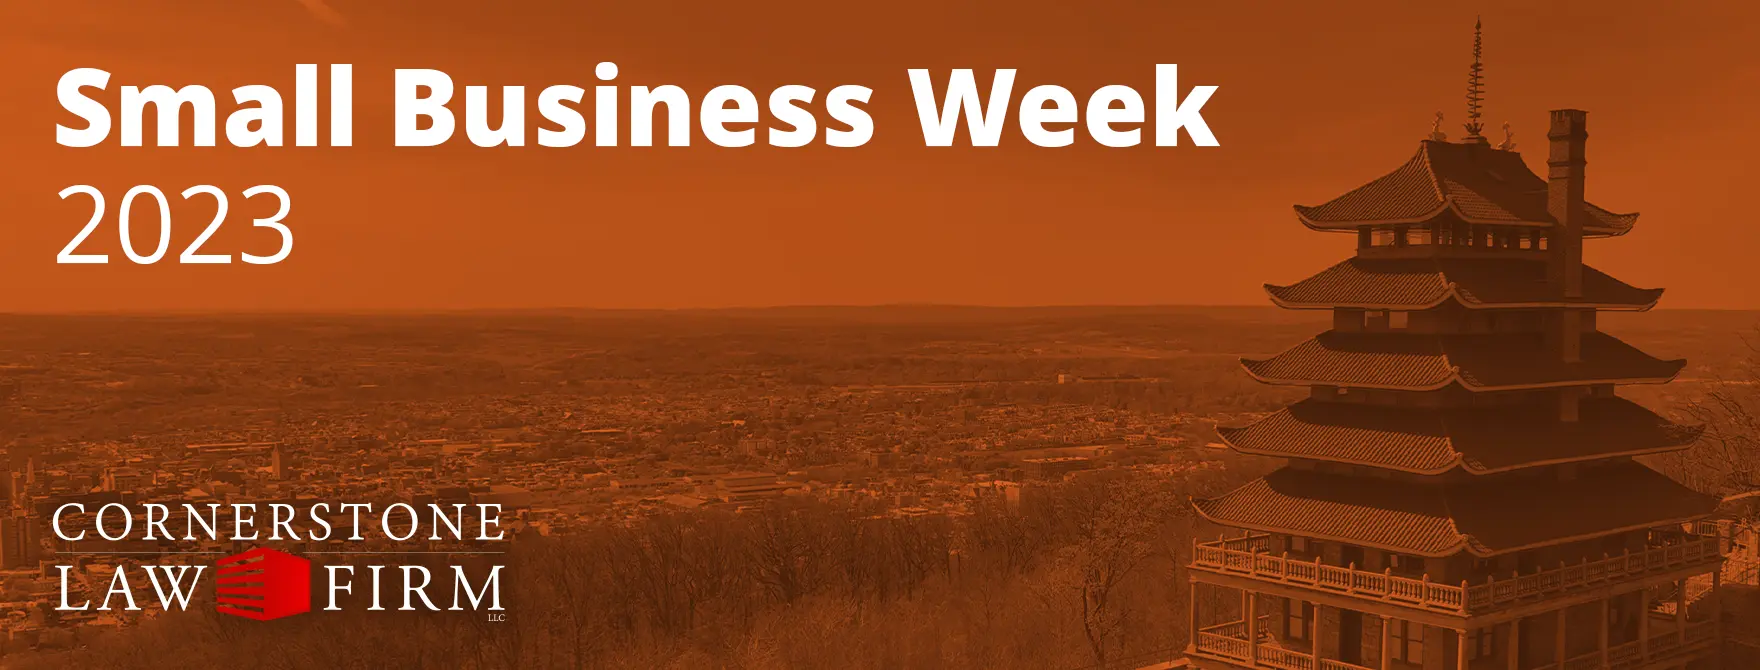 Orange small business week 2023 header image